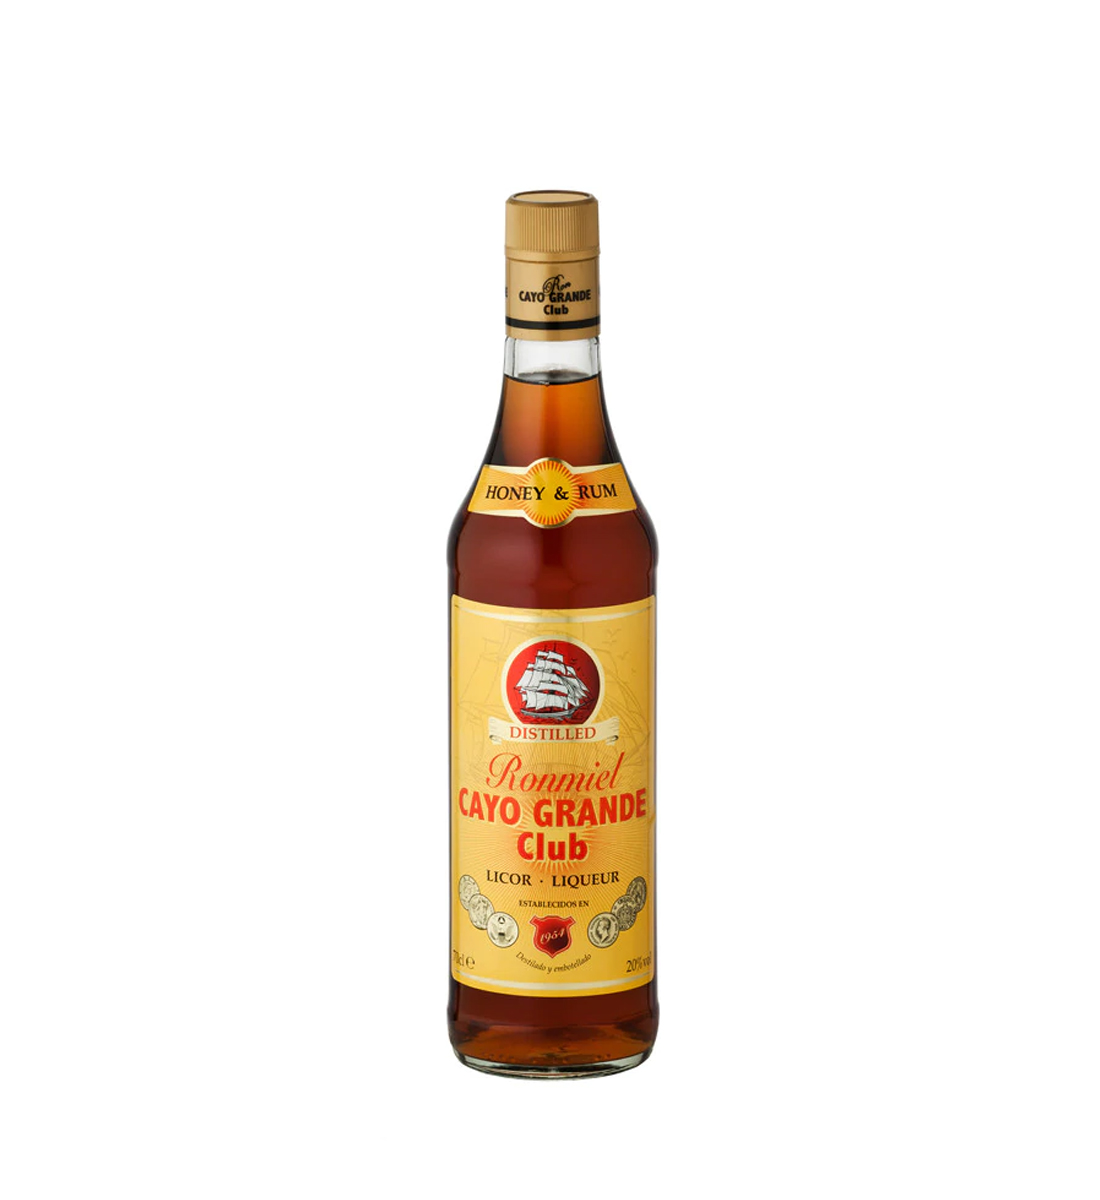 Cayo Grande Club Ronmiel Honey & Rum 0.7L